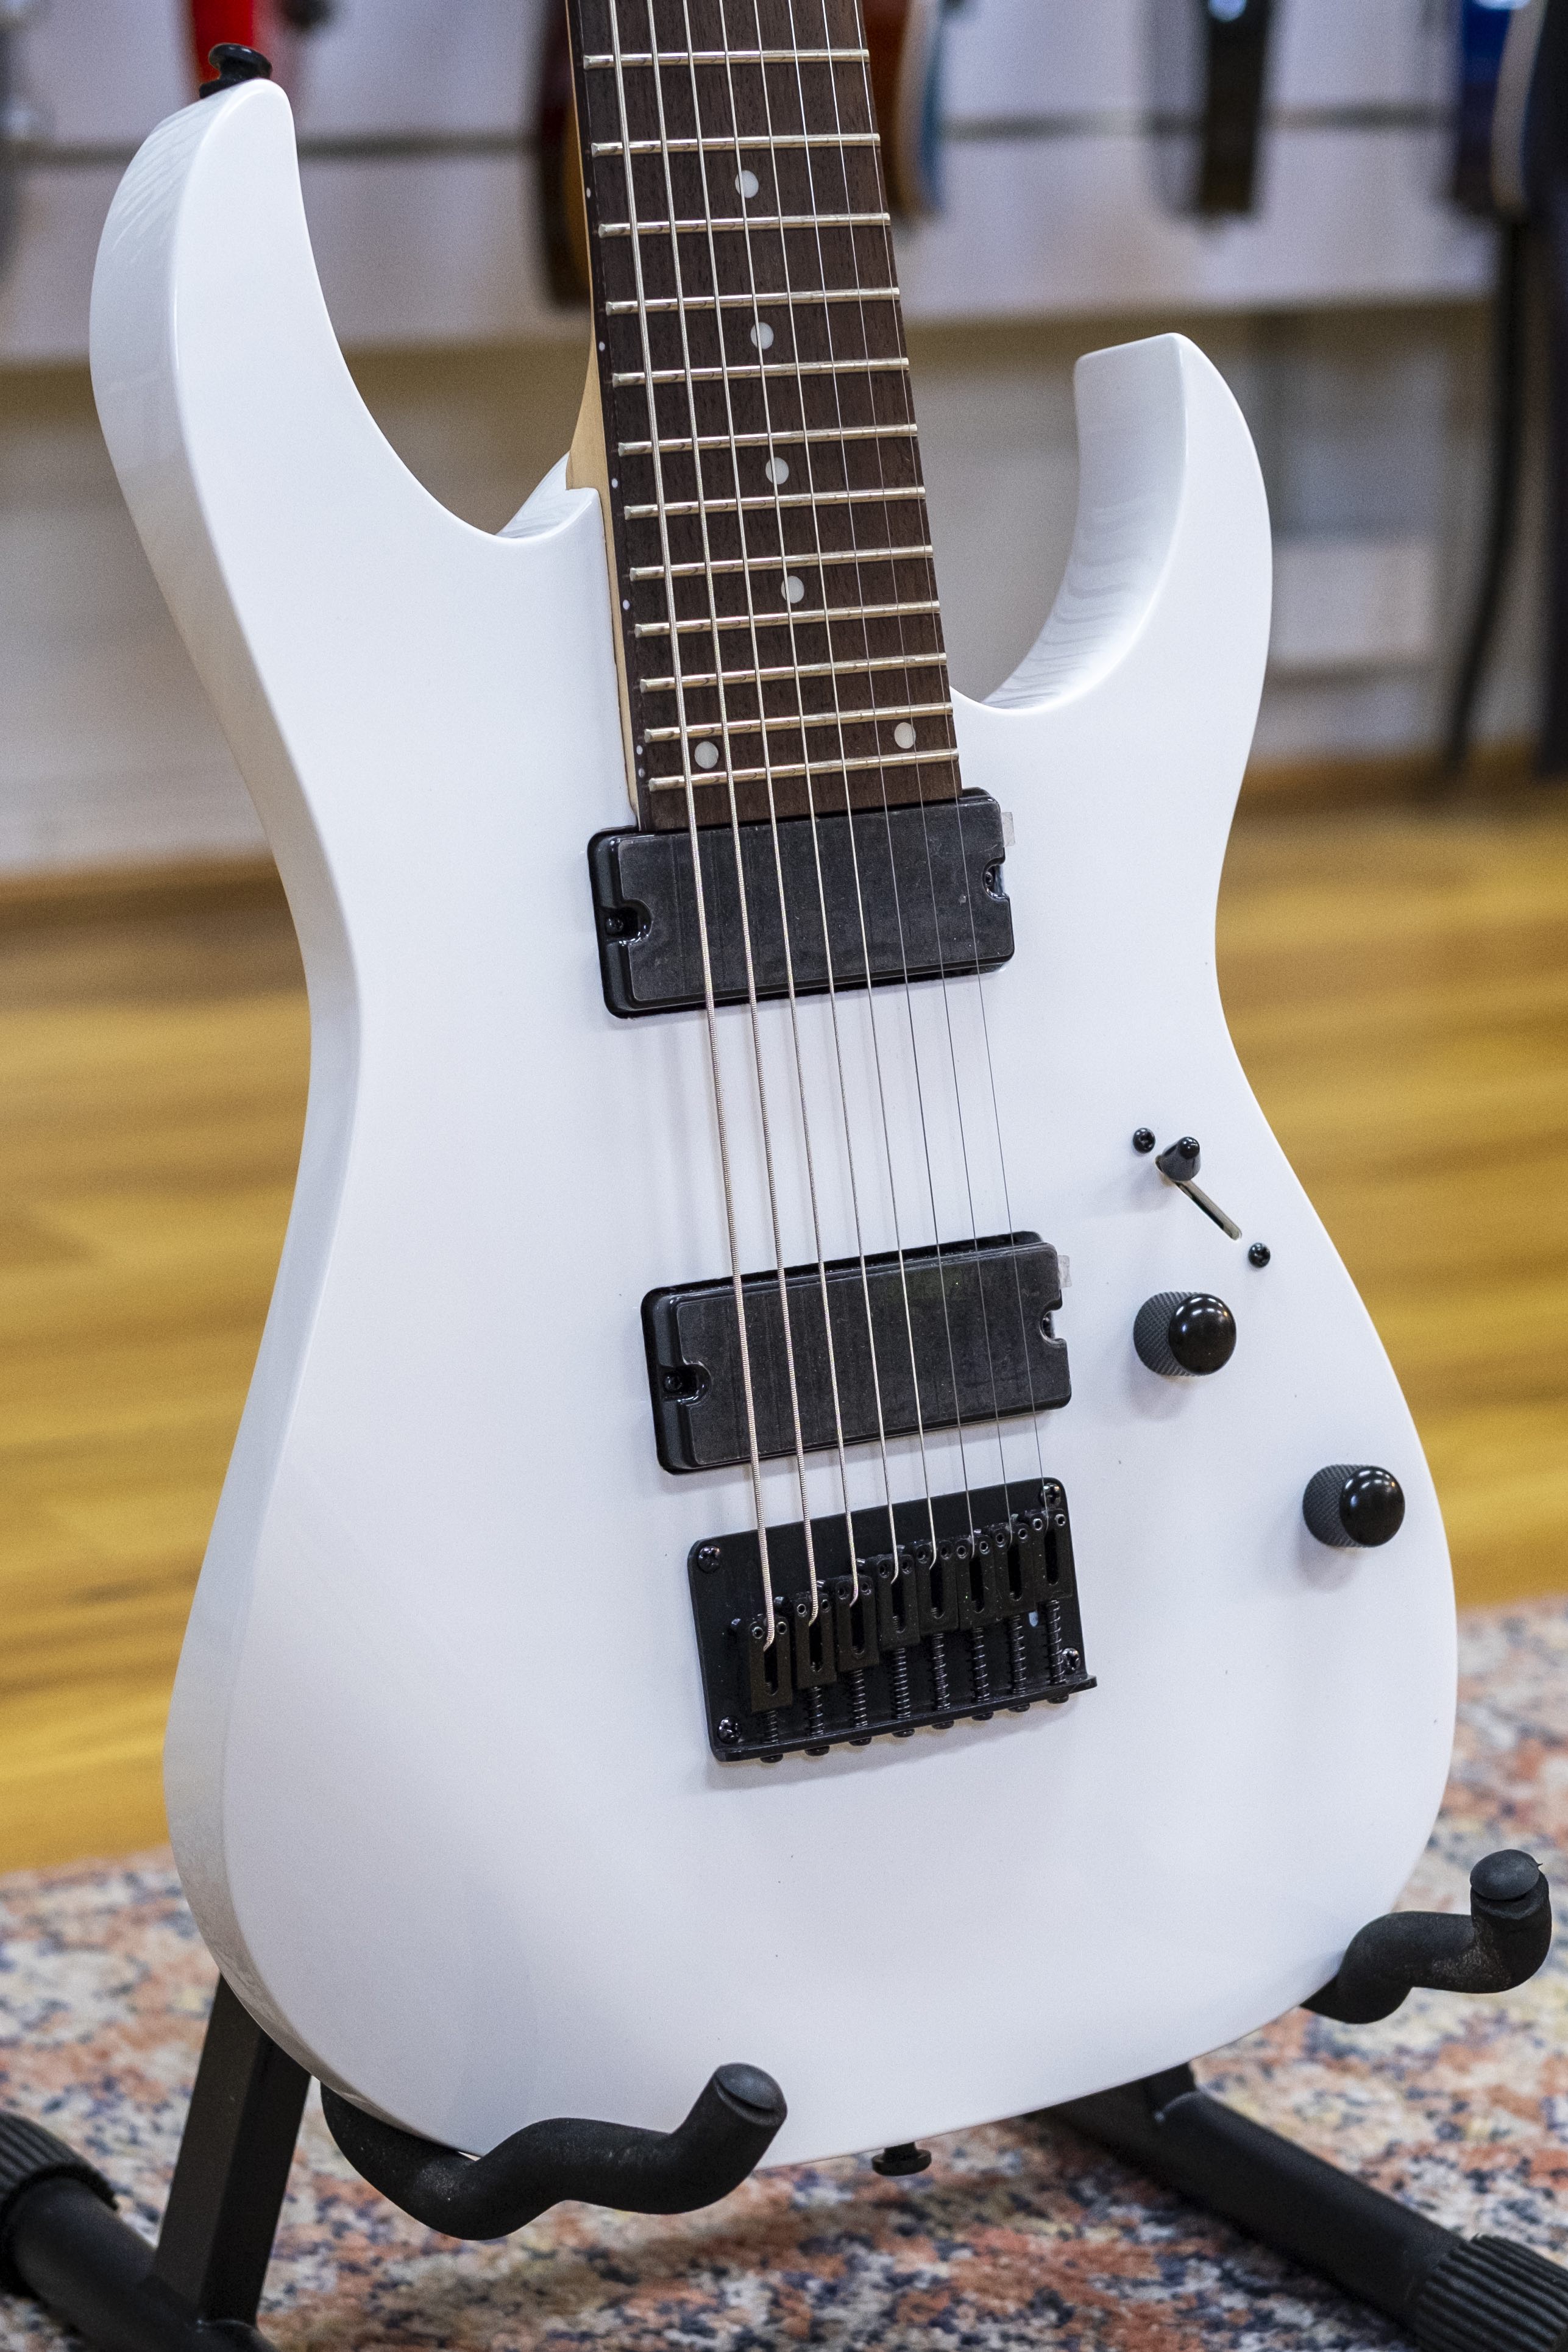 Ibanez RG8 8-String Electric Guitar (White)